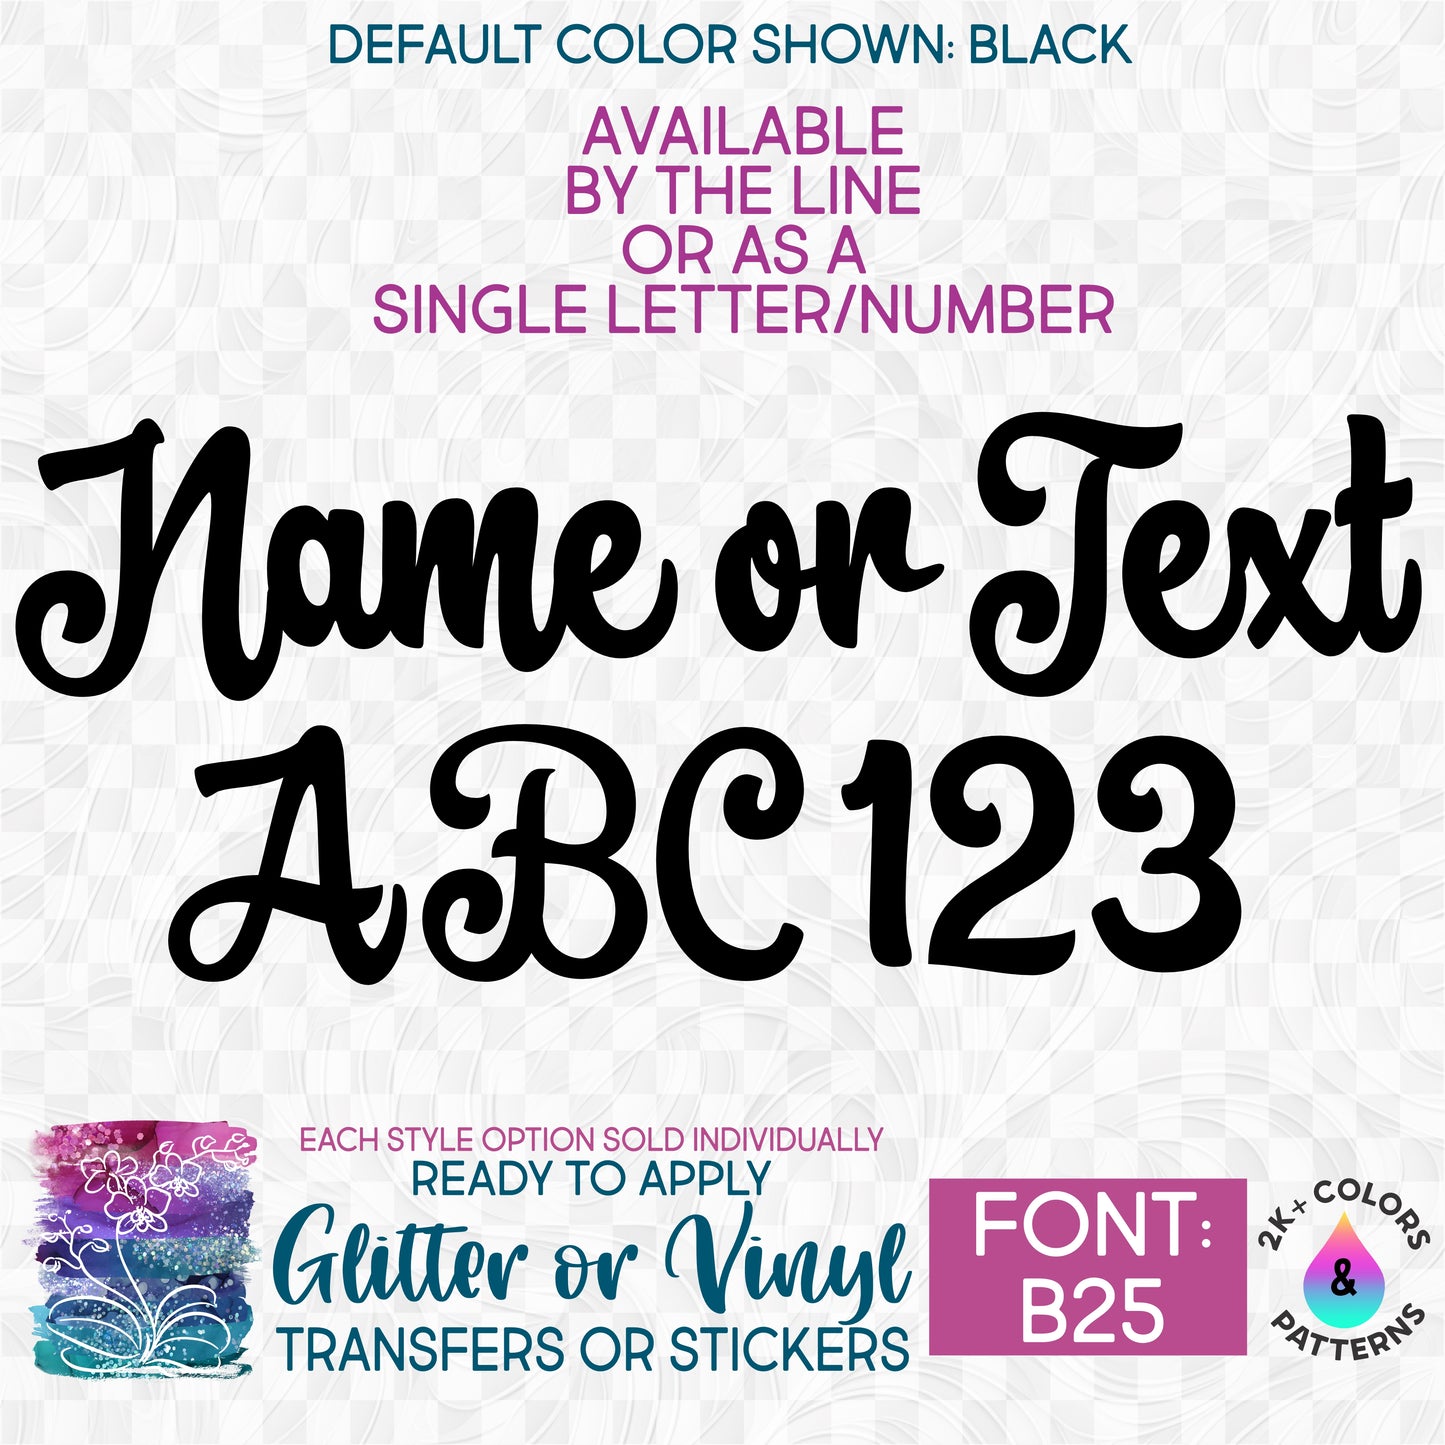 (s97-B25) Script Font Custom Name Text or Single Letter Number Glitter or Vinyl Iron-On Transfer or Sticker